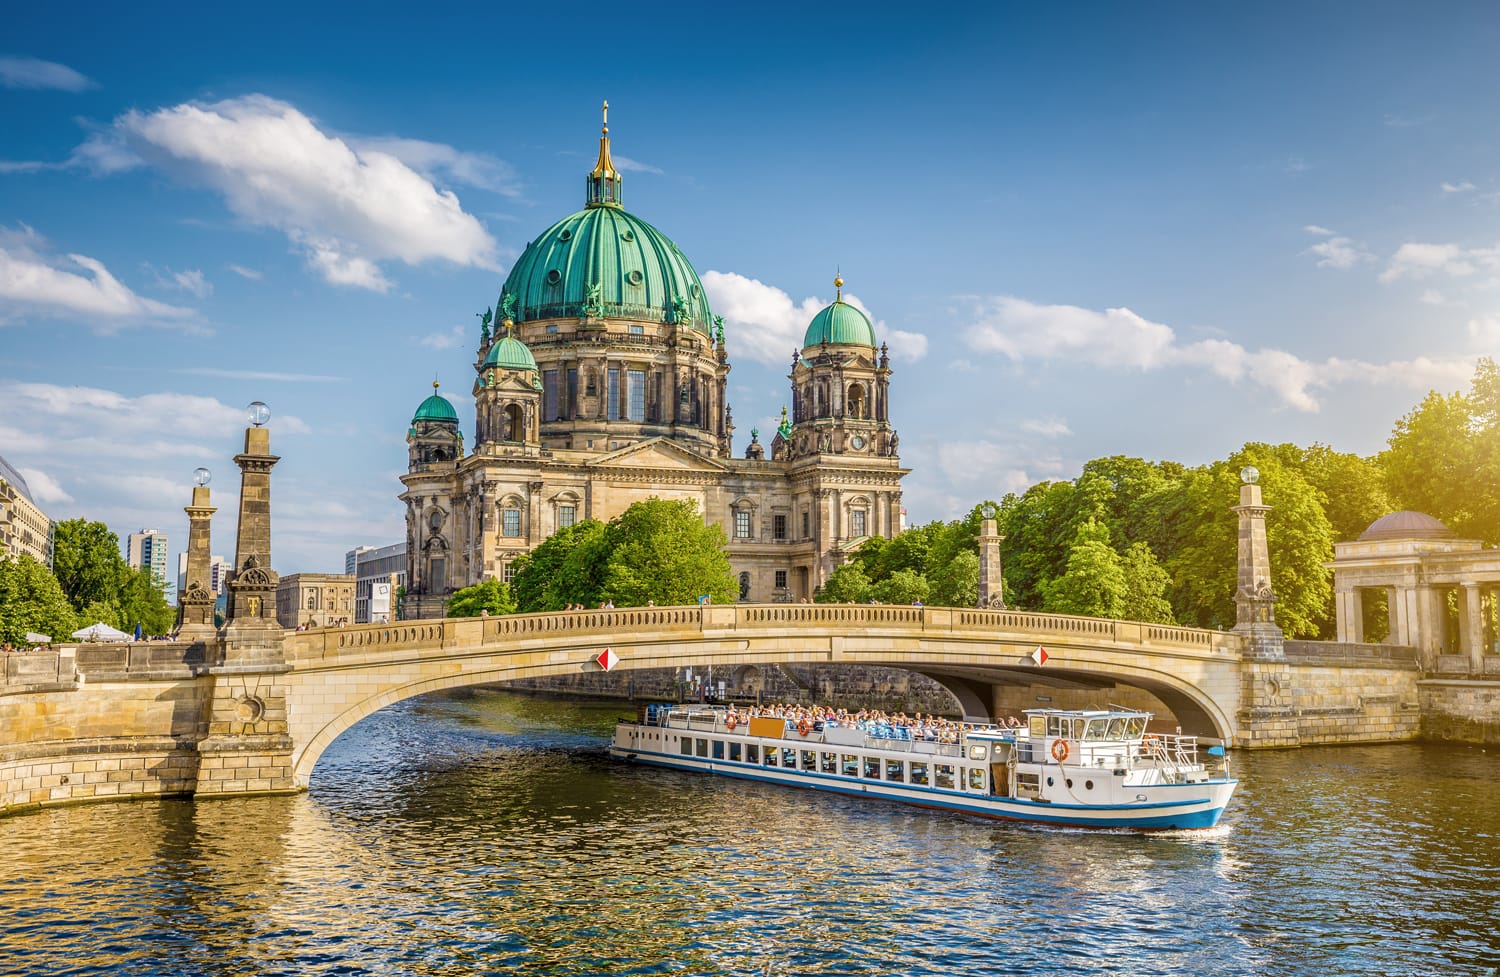 Pemandangan indah Katedral Berlin (Berliner Dom) yang bersejarah di Museum Island yang terkenal dengan kapal yang melewati jembatan Friedrichsbrucke di sungai Spree dalam cahaya malam keemasan saat matahari terbenam di musim panas, Berlin, Jerman